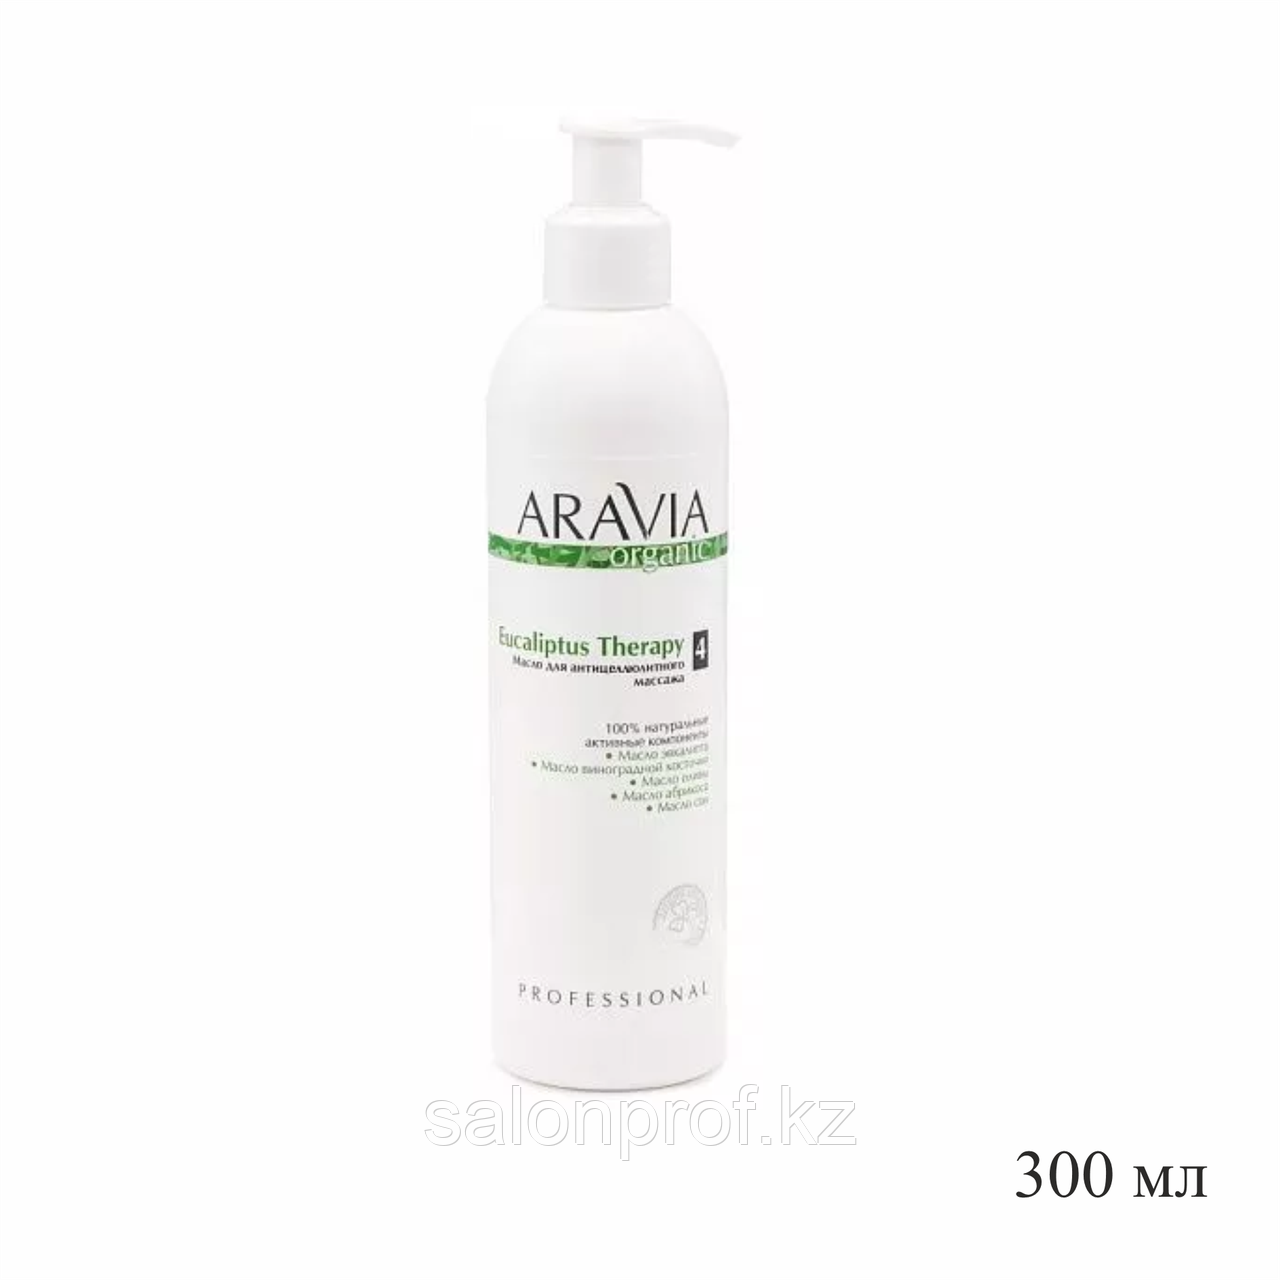 Масло ARAVIA Organic Eucaliptus therapy для антицеллюлитного массажа 300 мл №94901